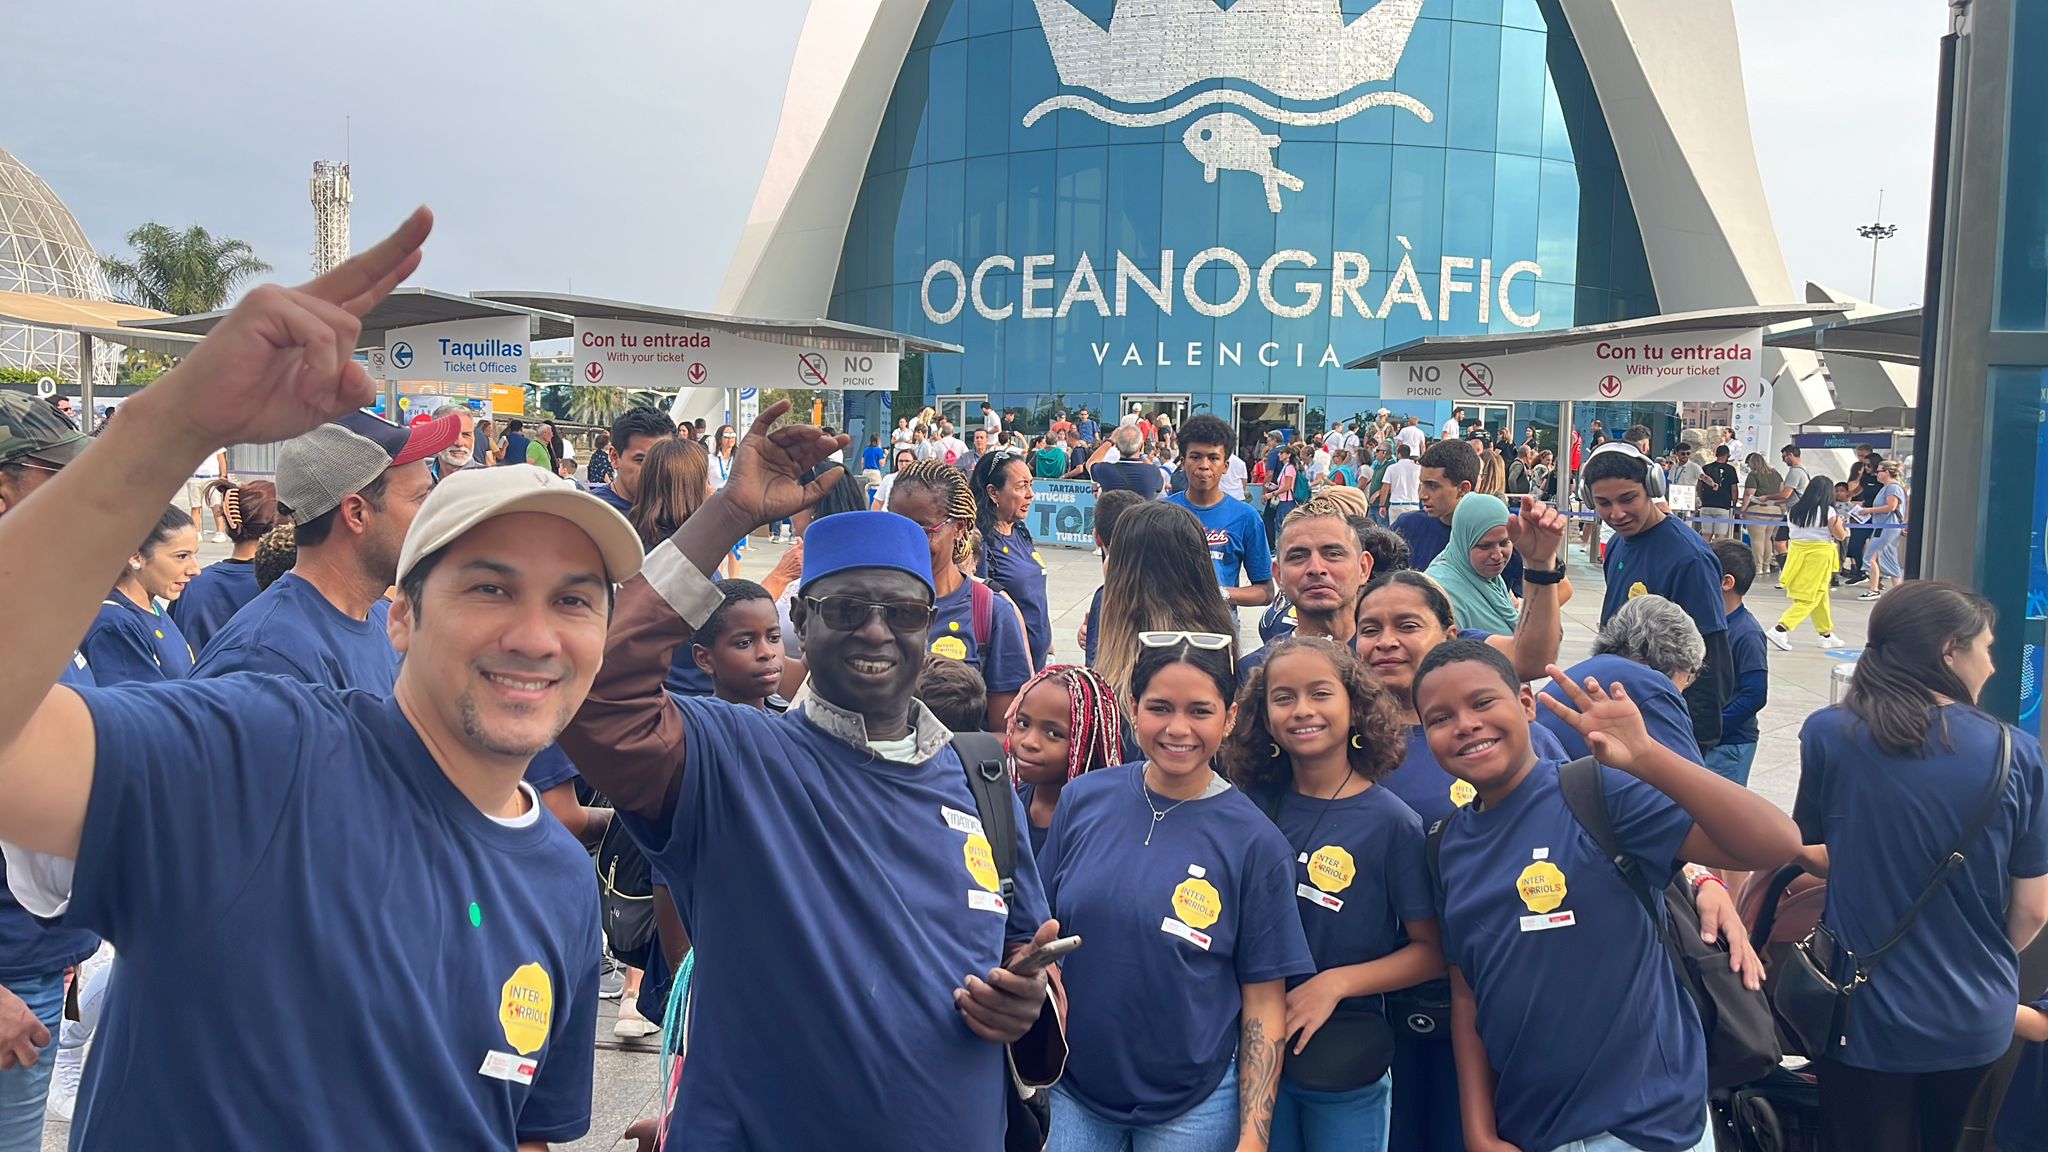 Ocio intercultural e intergeneracional: visita al Oceanogrâfic